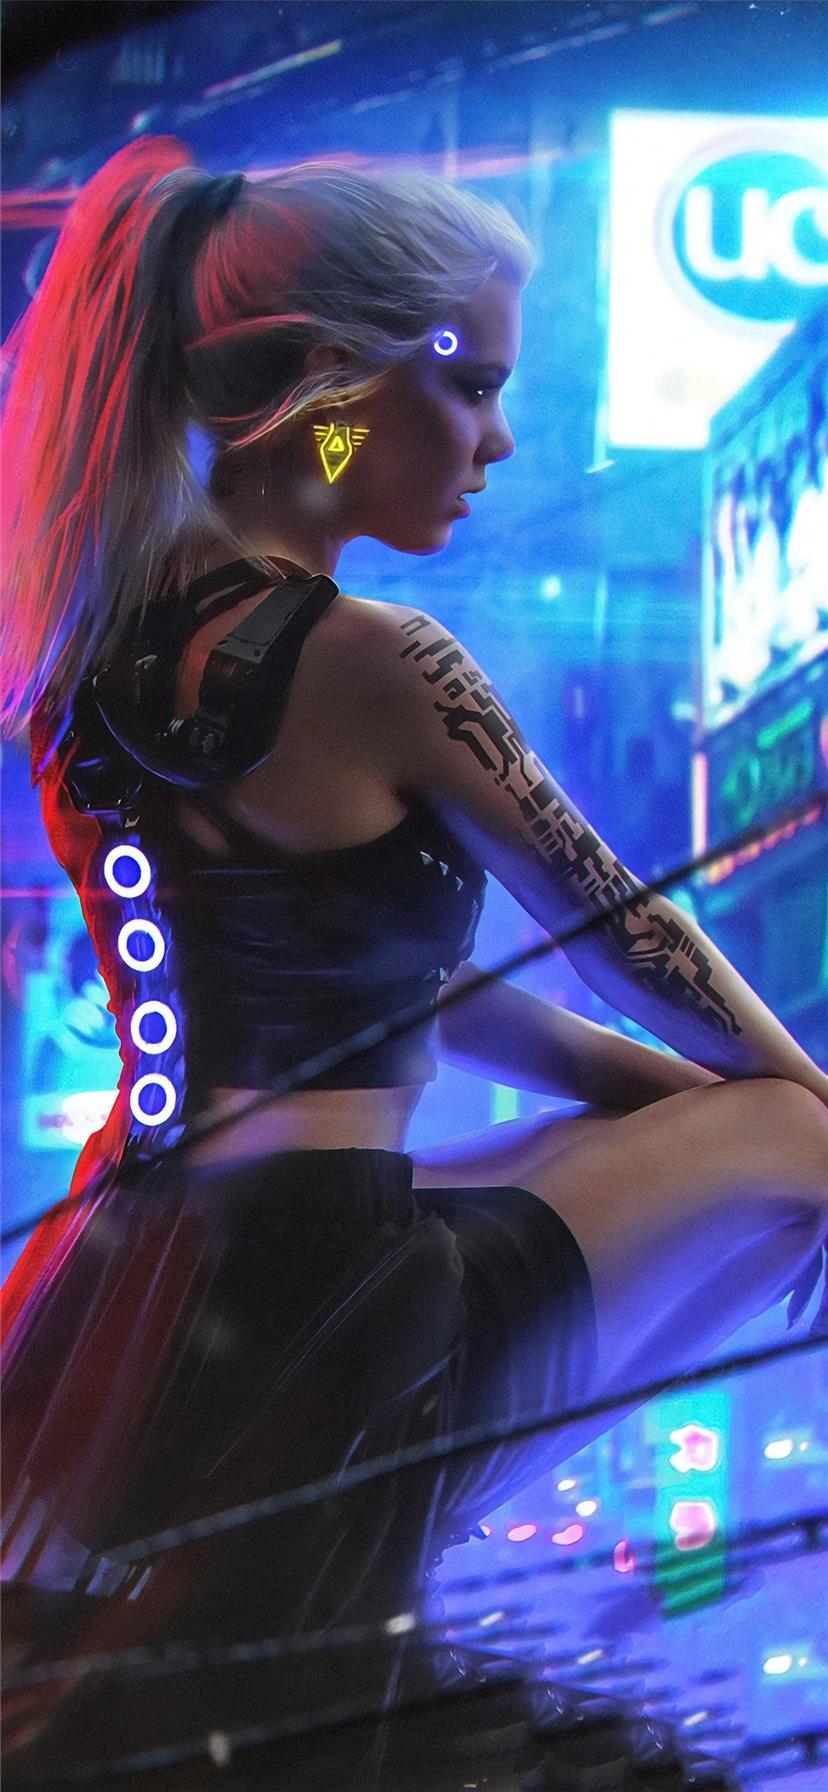 cyberpunk neon girl 4k iPhone Wallpaper Free Download